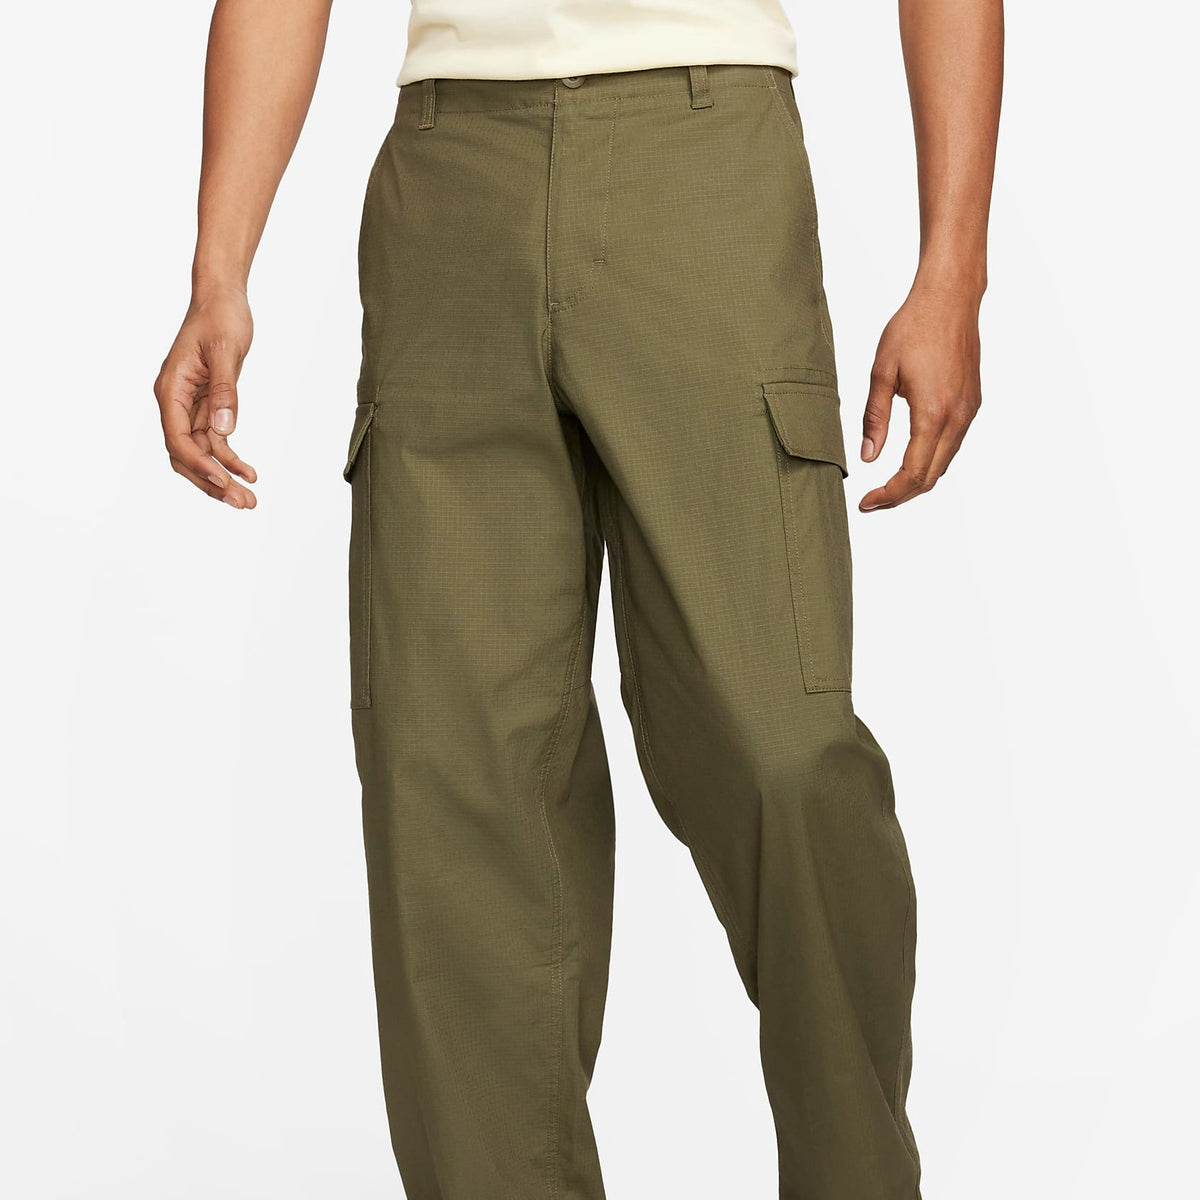 Nike SB Kearny Cargo Skate Pants - Medium Olive